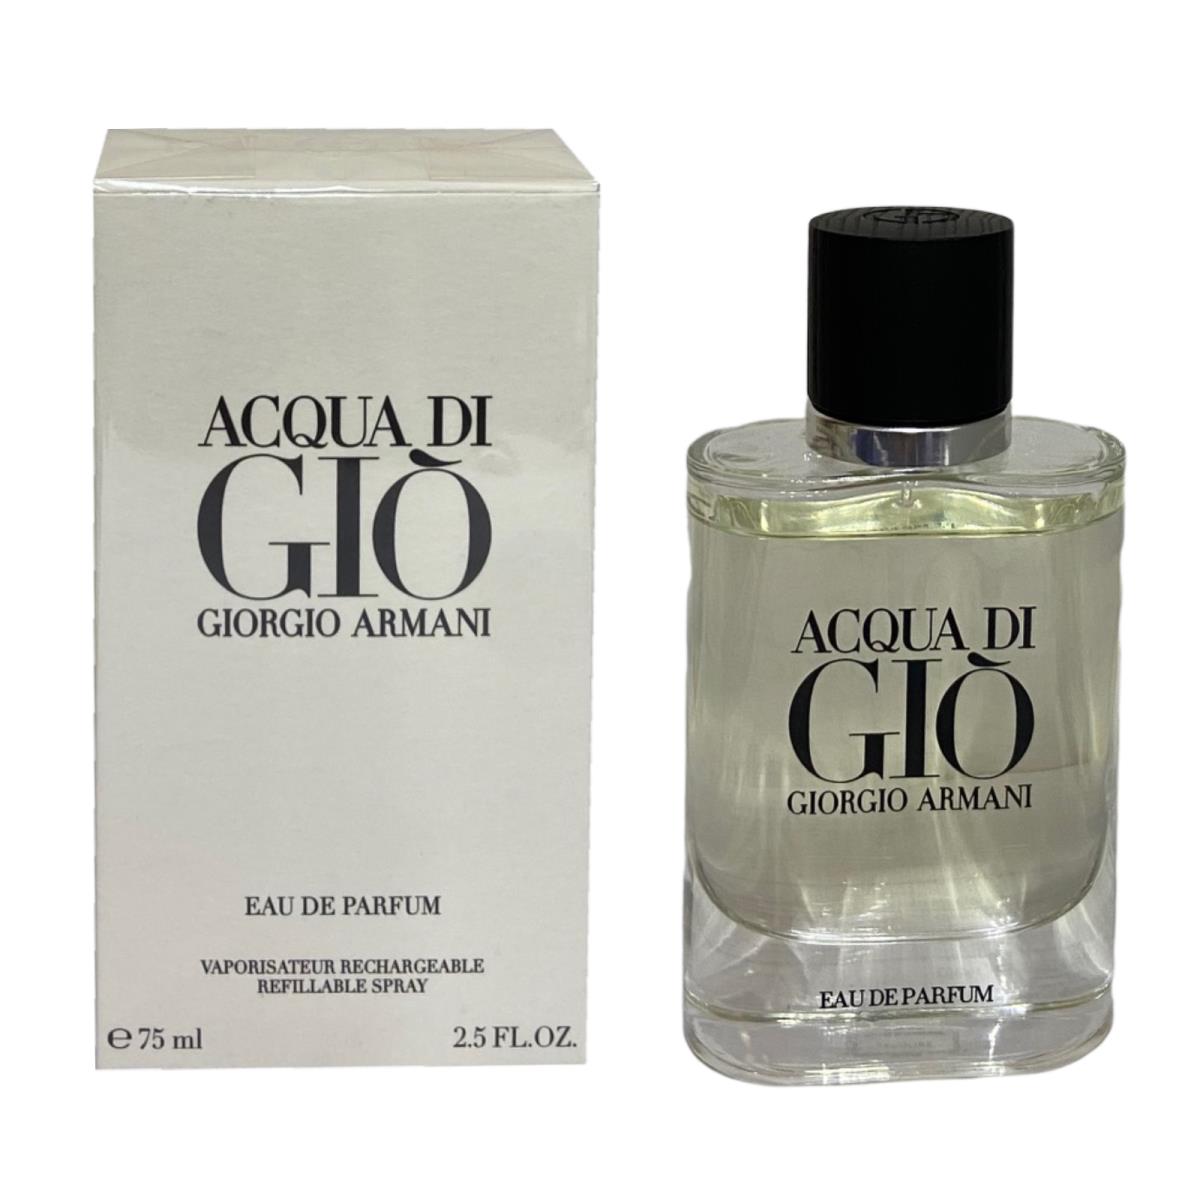 Acqua di Gio Giorgio Armani Edp 2.5 Oz 75 mL Mens Perfume Spray